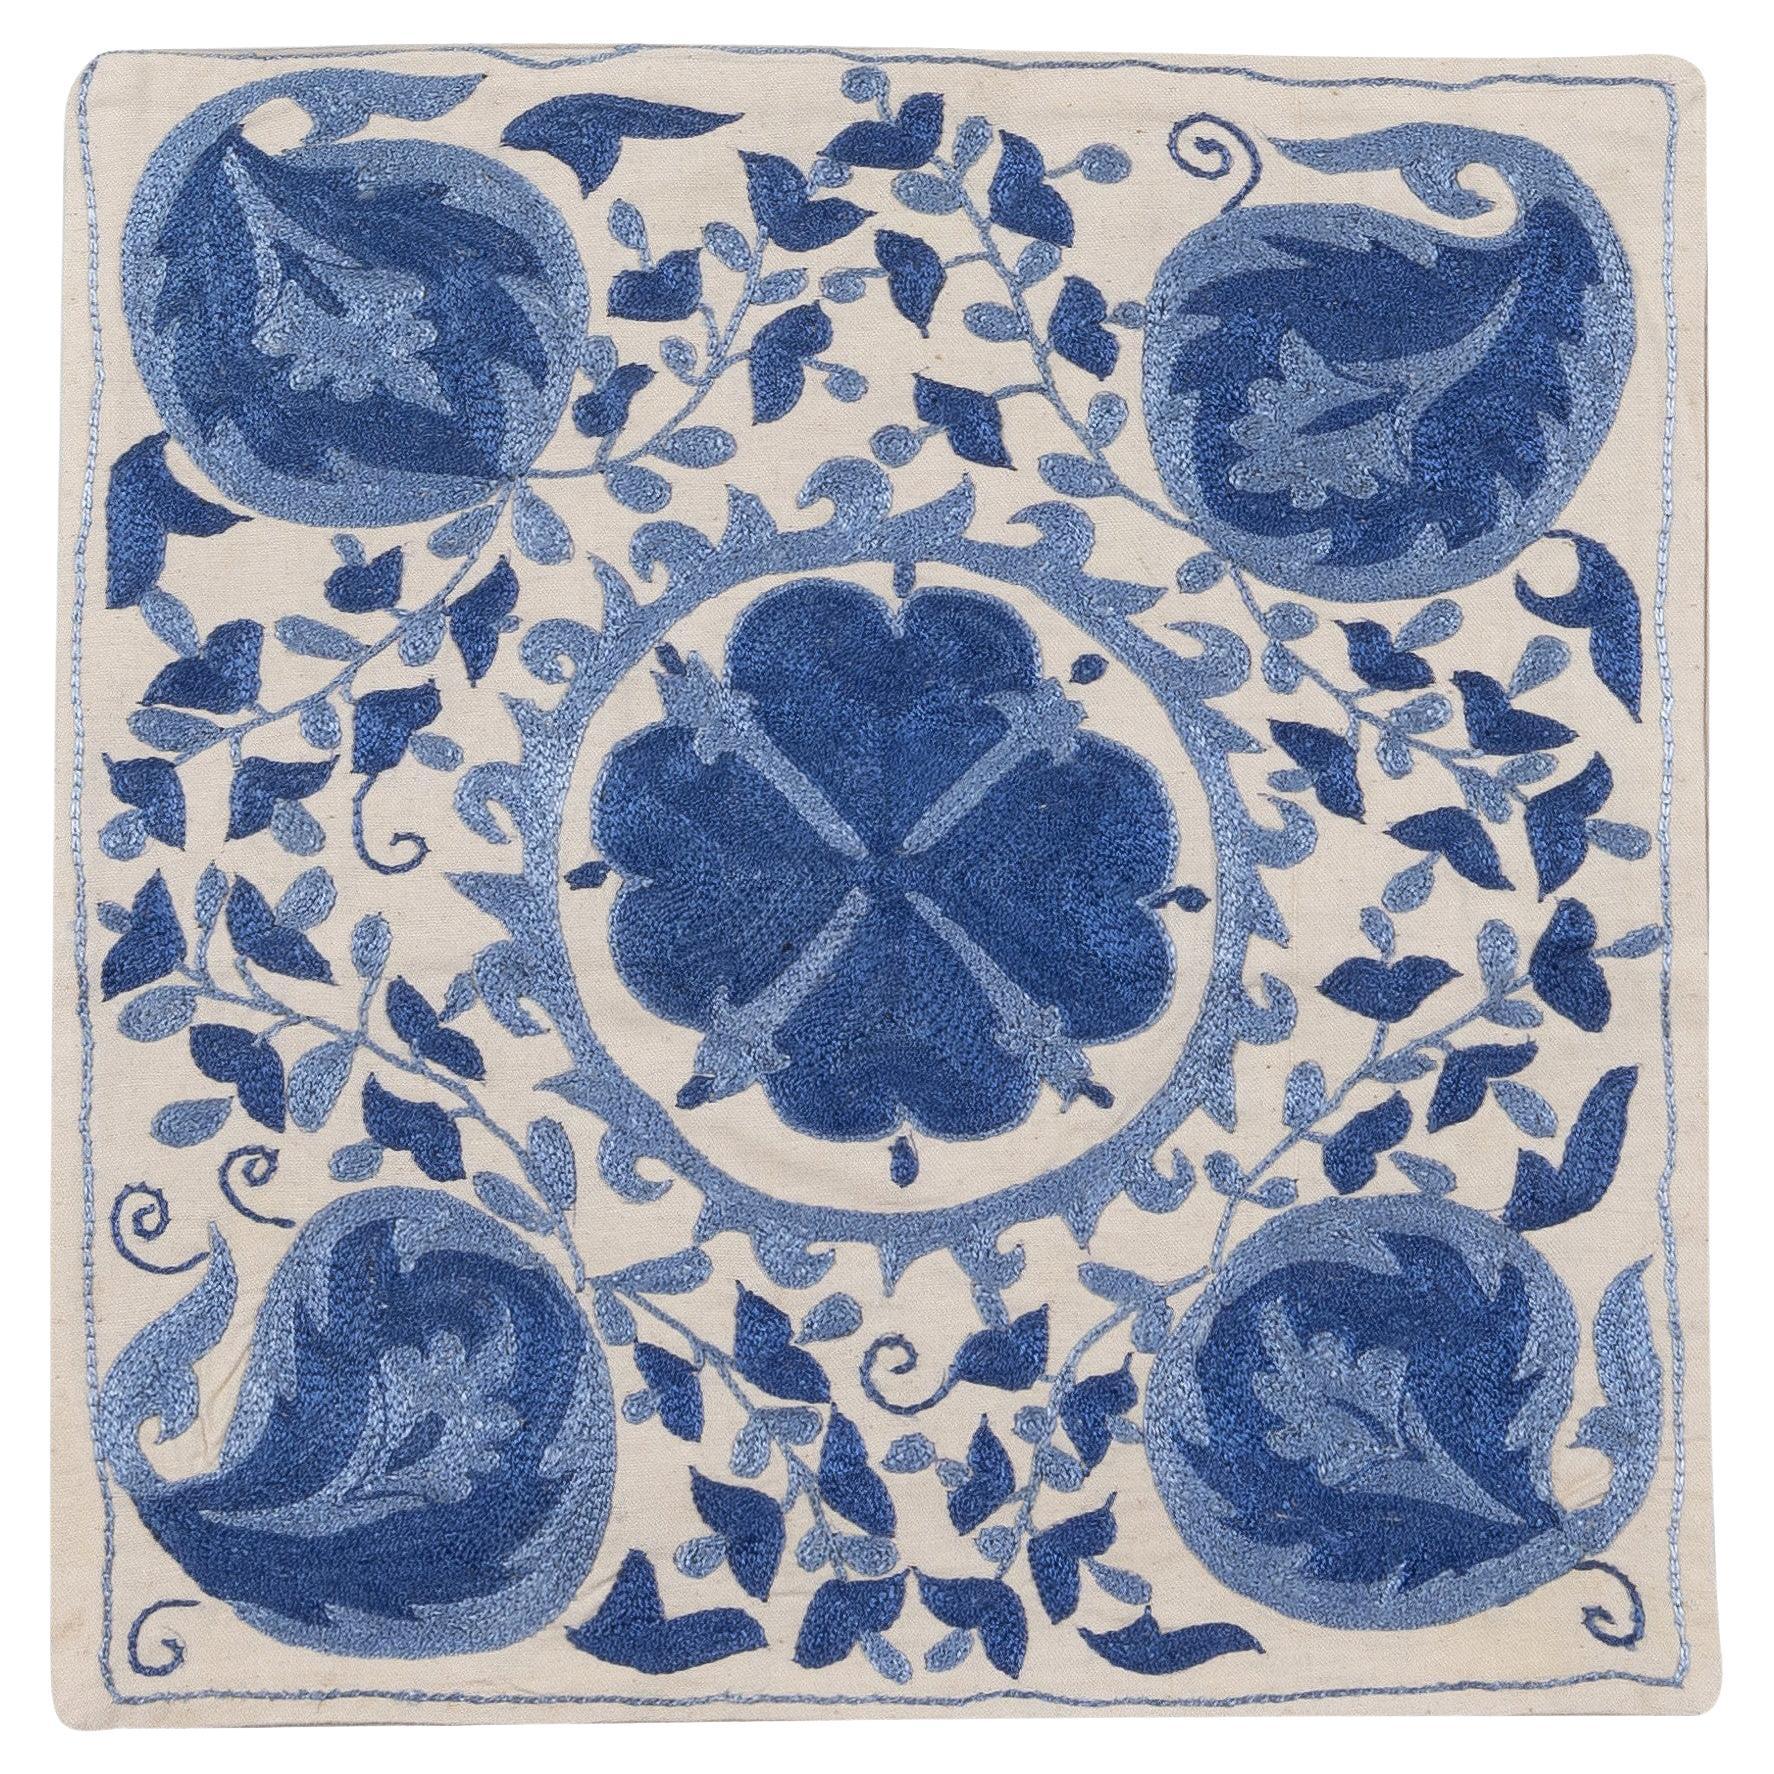 Decorative Silk Embroidered Suzani Cushion Cover in Cream & Light Blue 18" x 17" For Sale